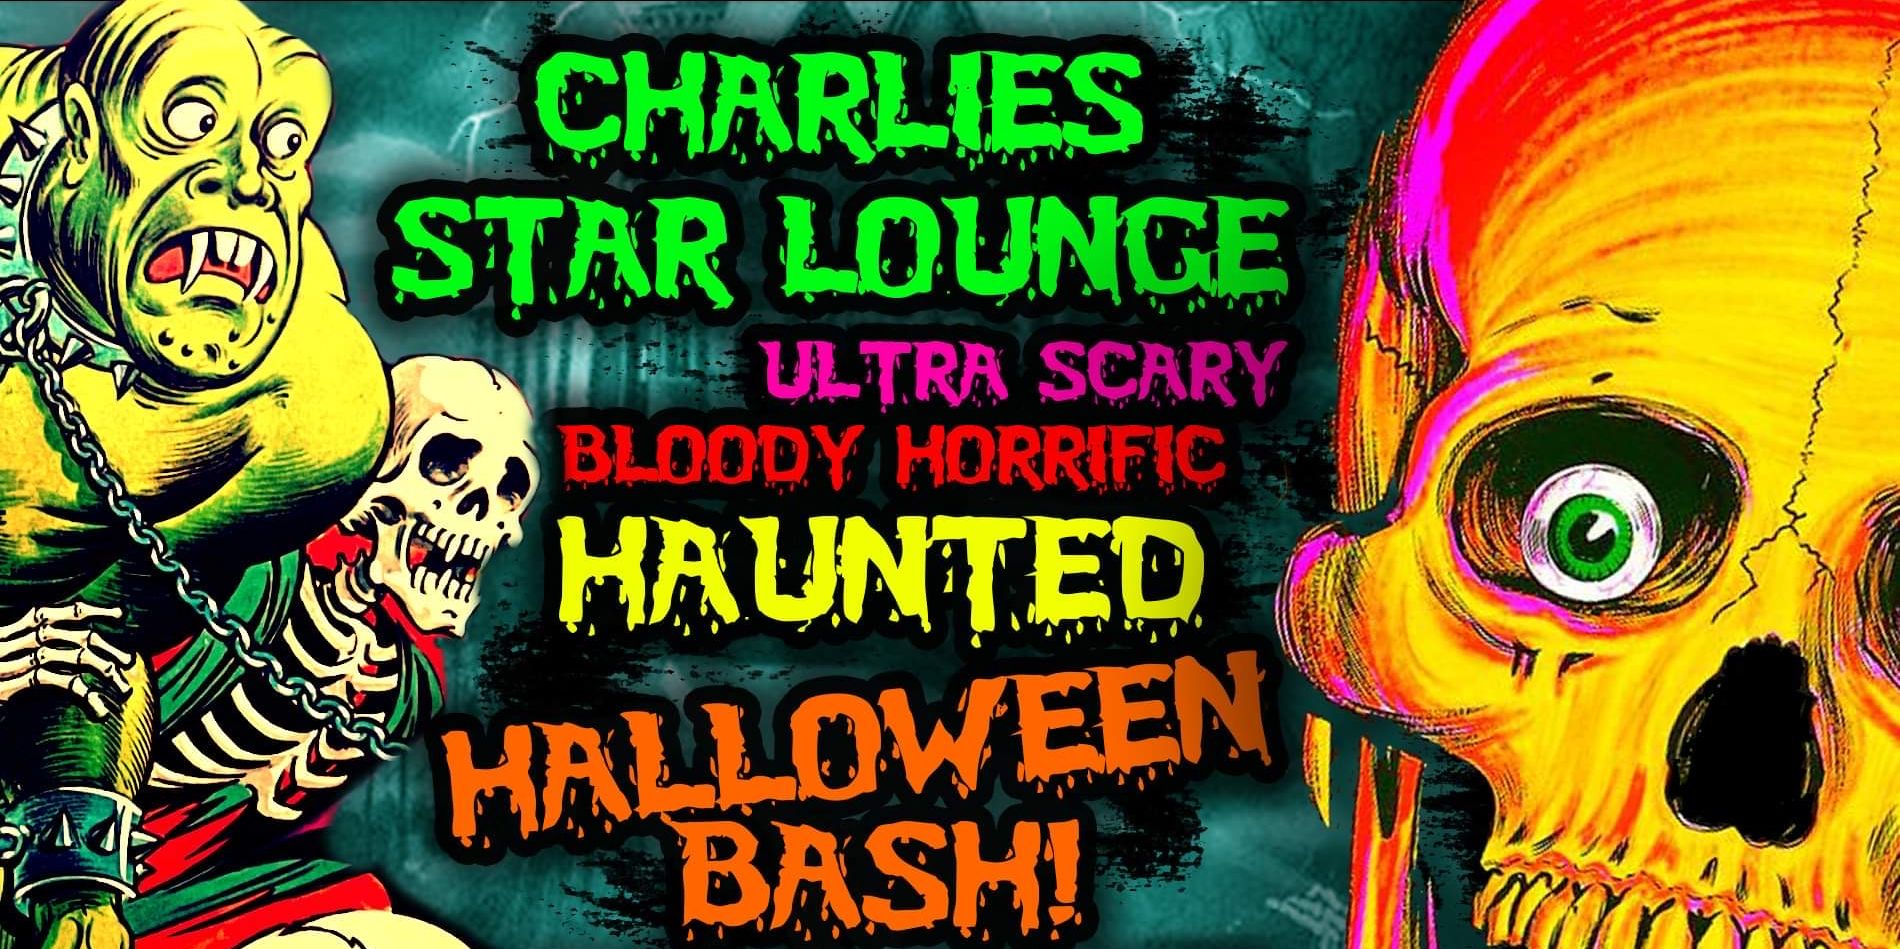 Charlie's Star Lounge Halloween Bash promotional image